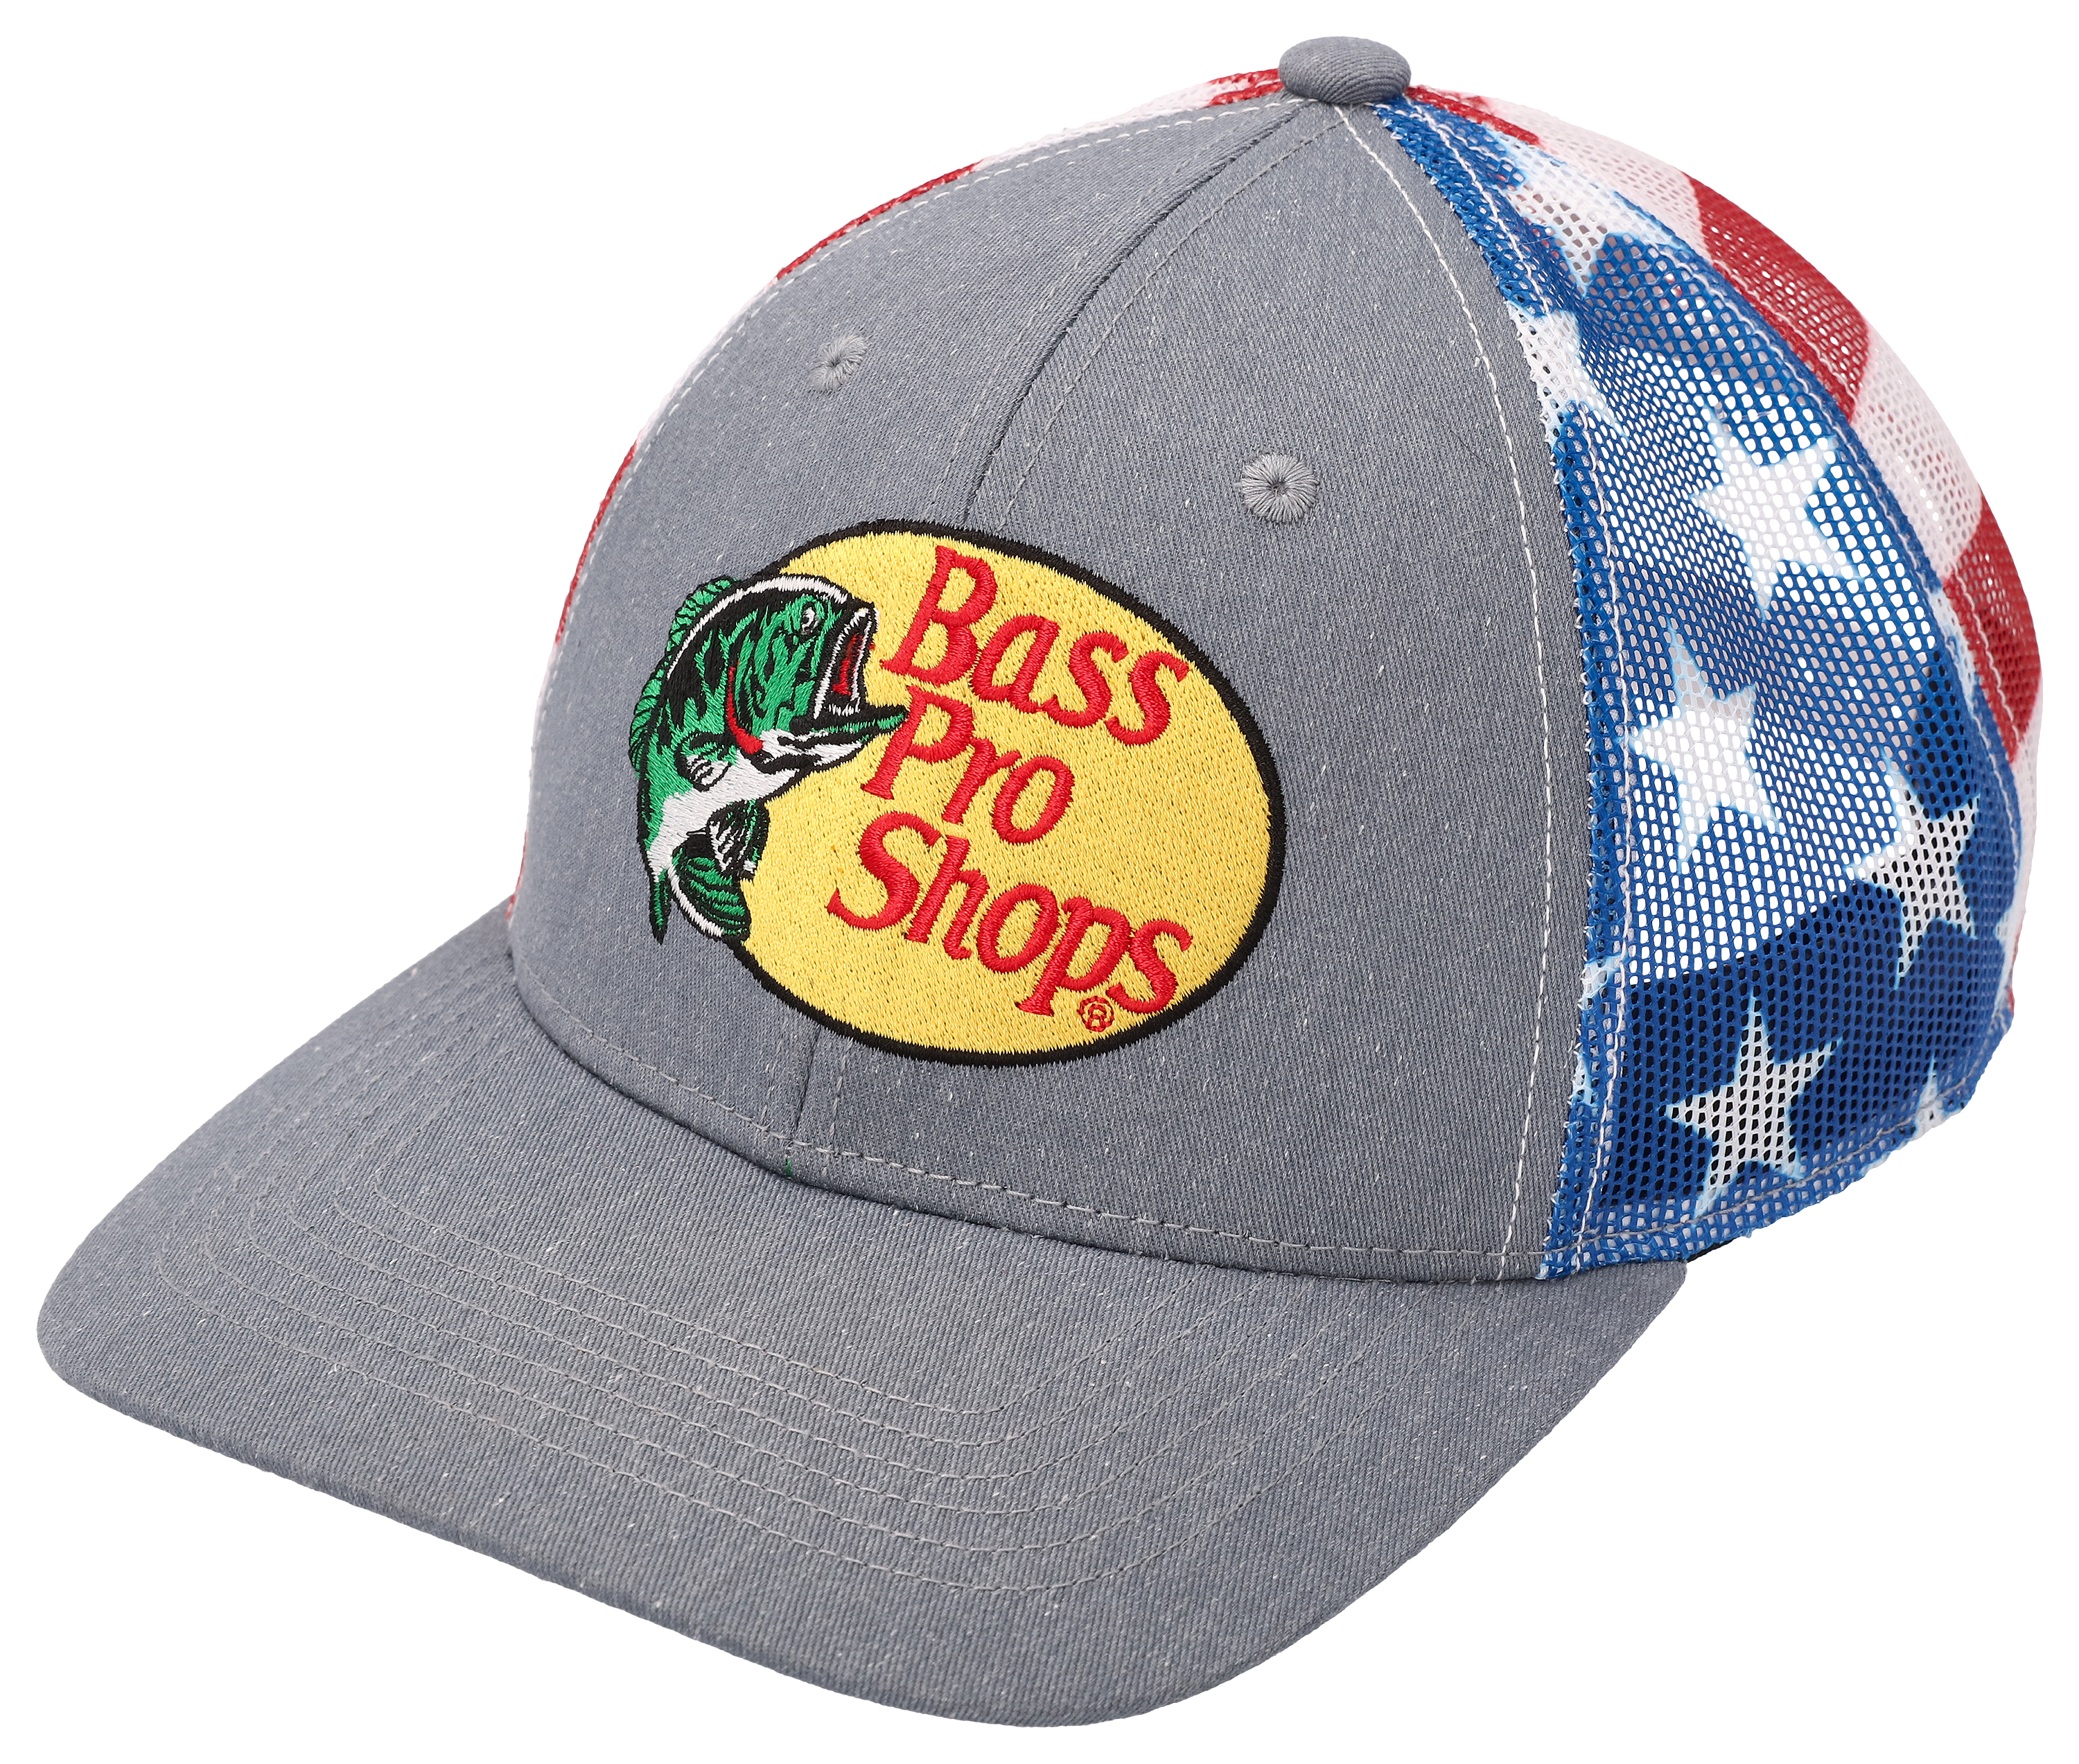 Bass Pro Shops Stars and Stripes Mesh-Back Cap